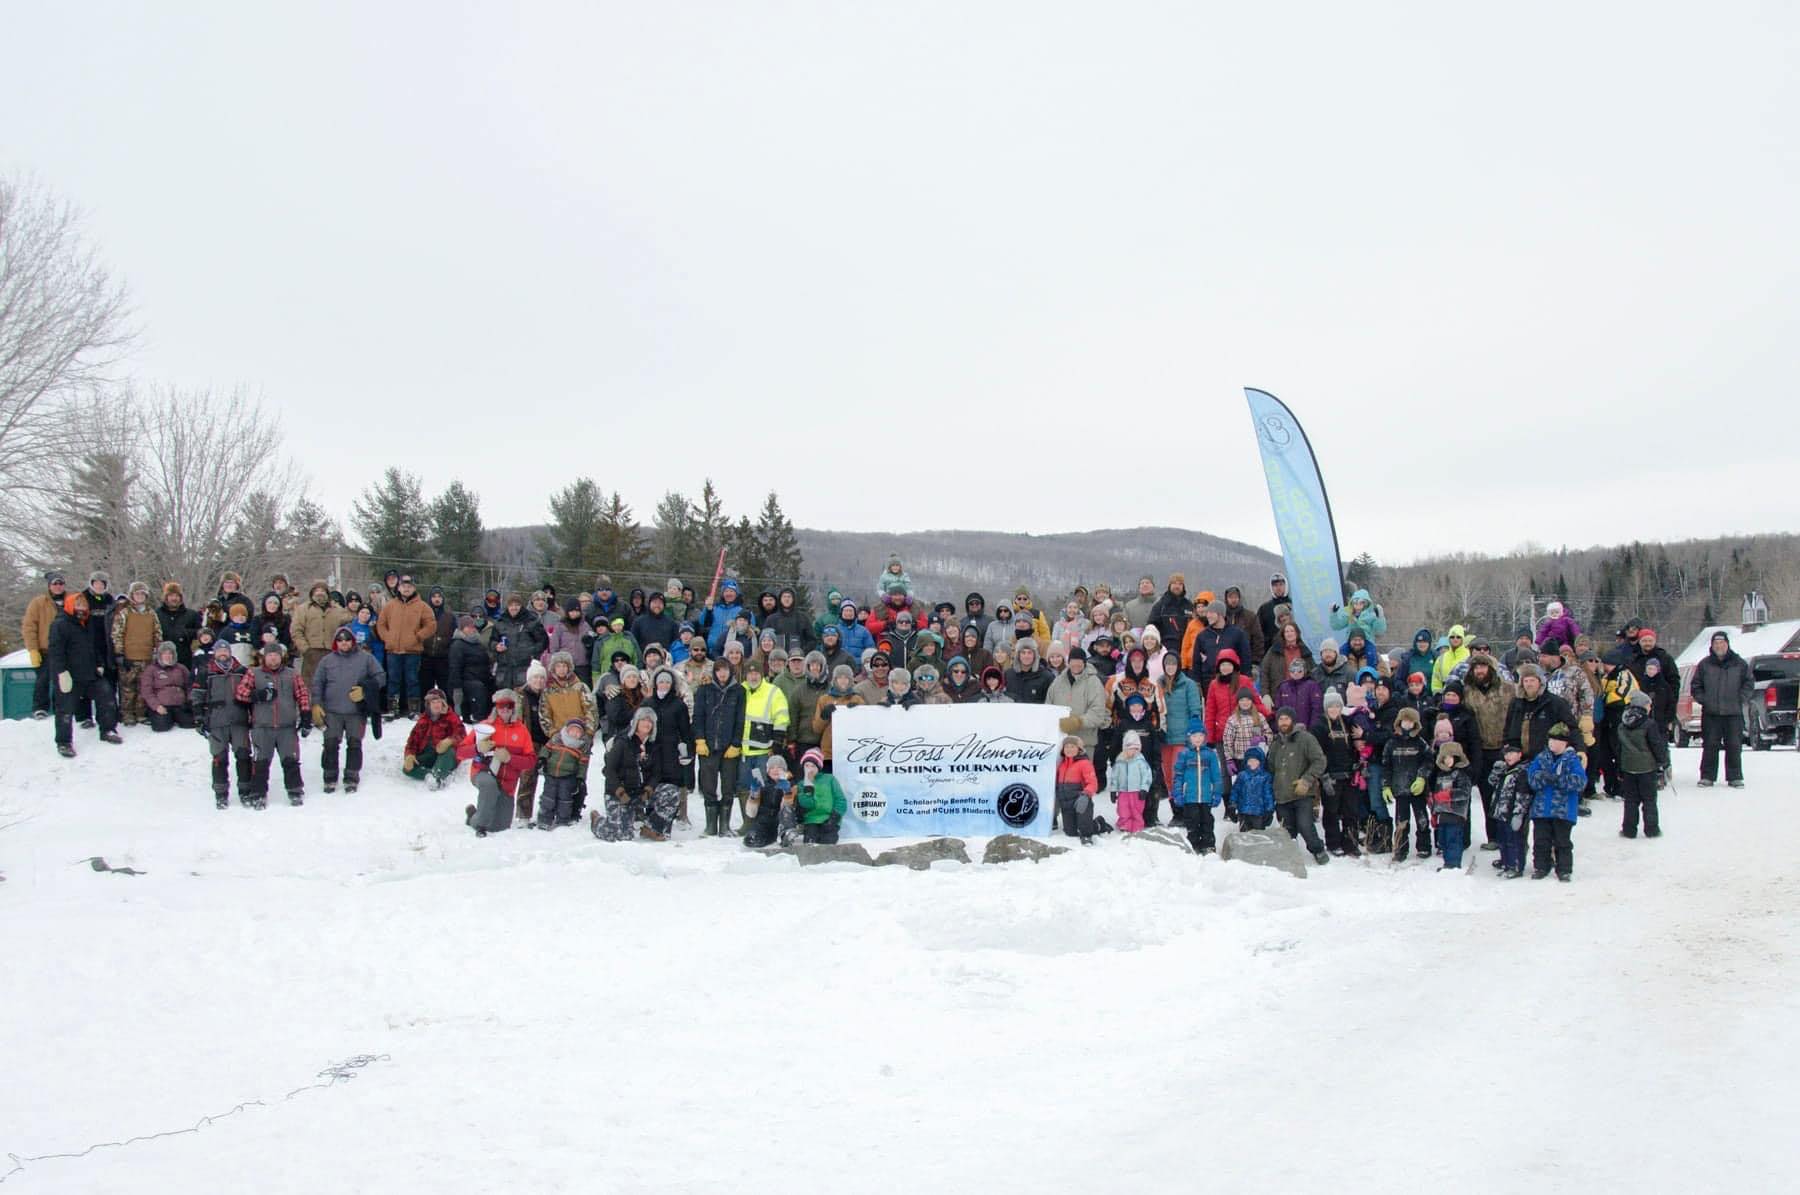 Eli Goss Memorial Ice Fishing Tournament | Discover Newport Vermont